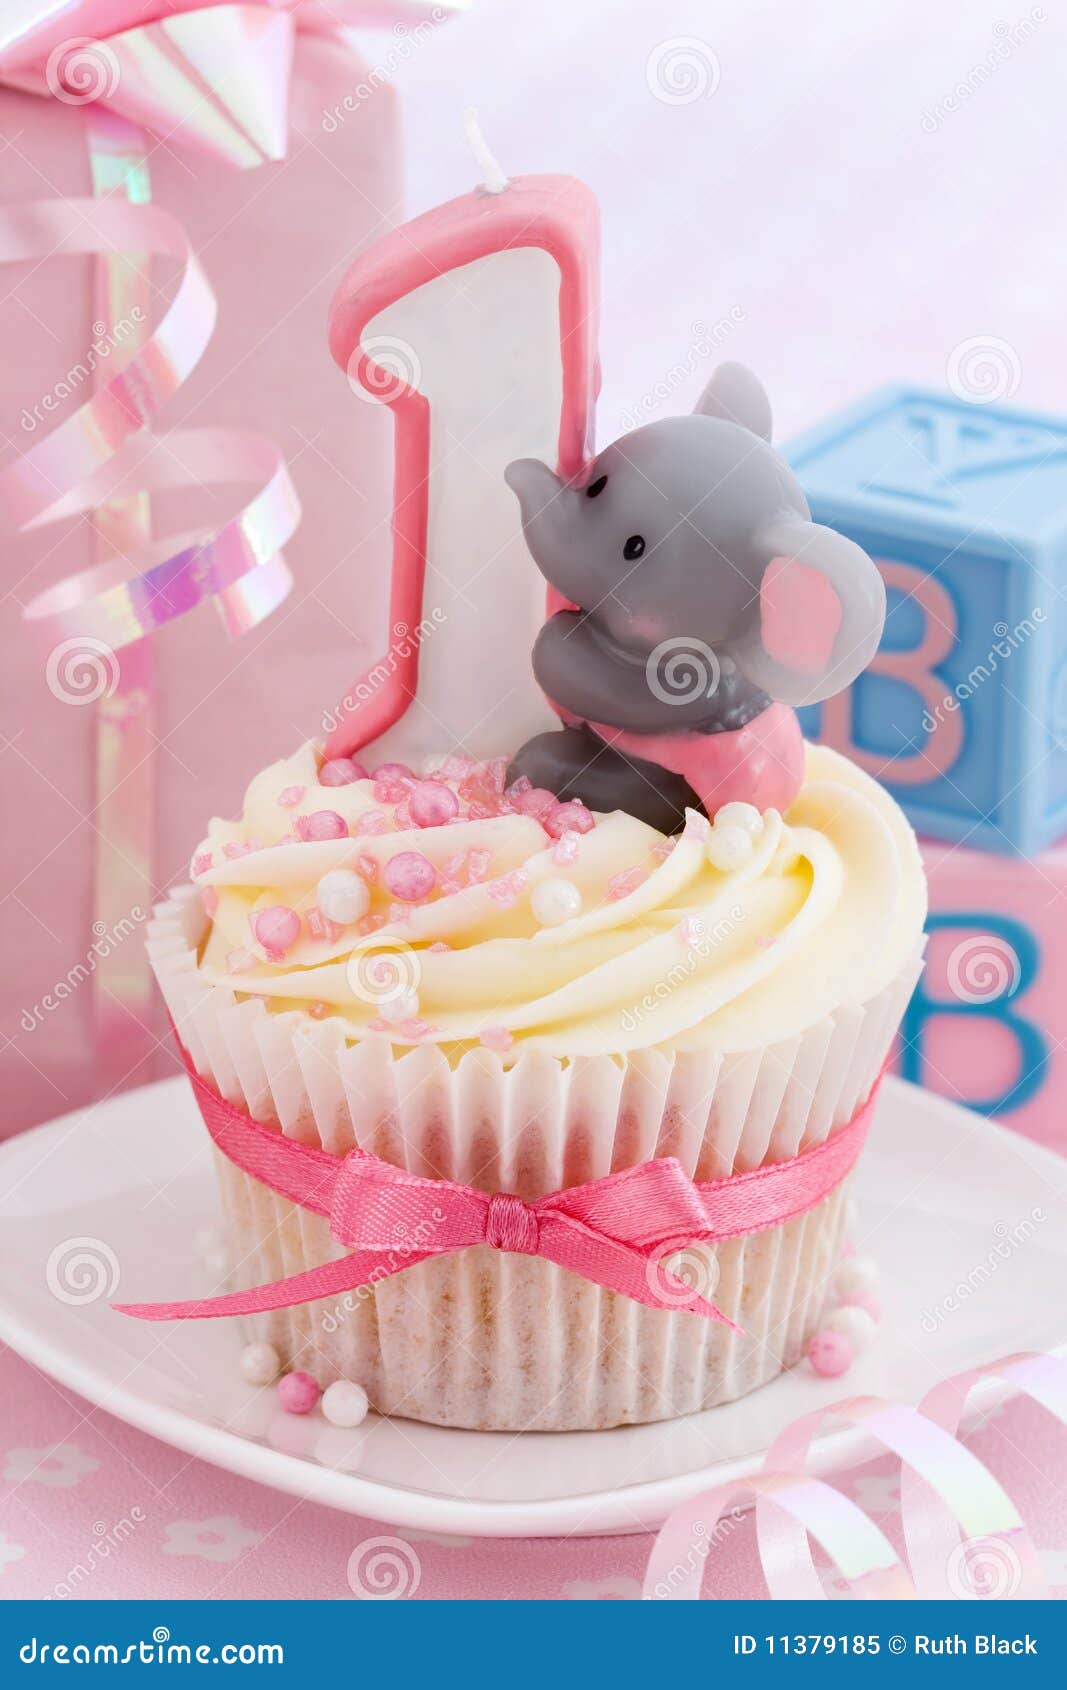 baby girl 1st birthday cakes